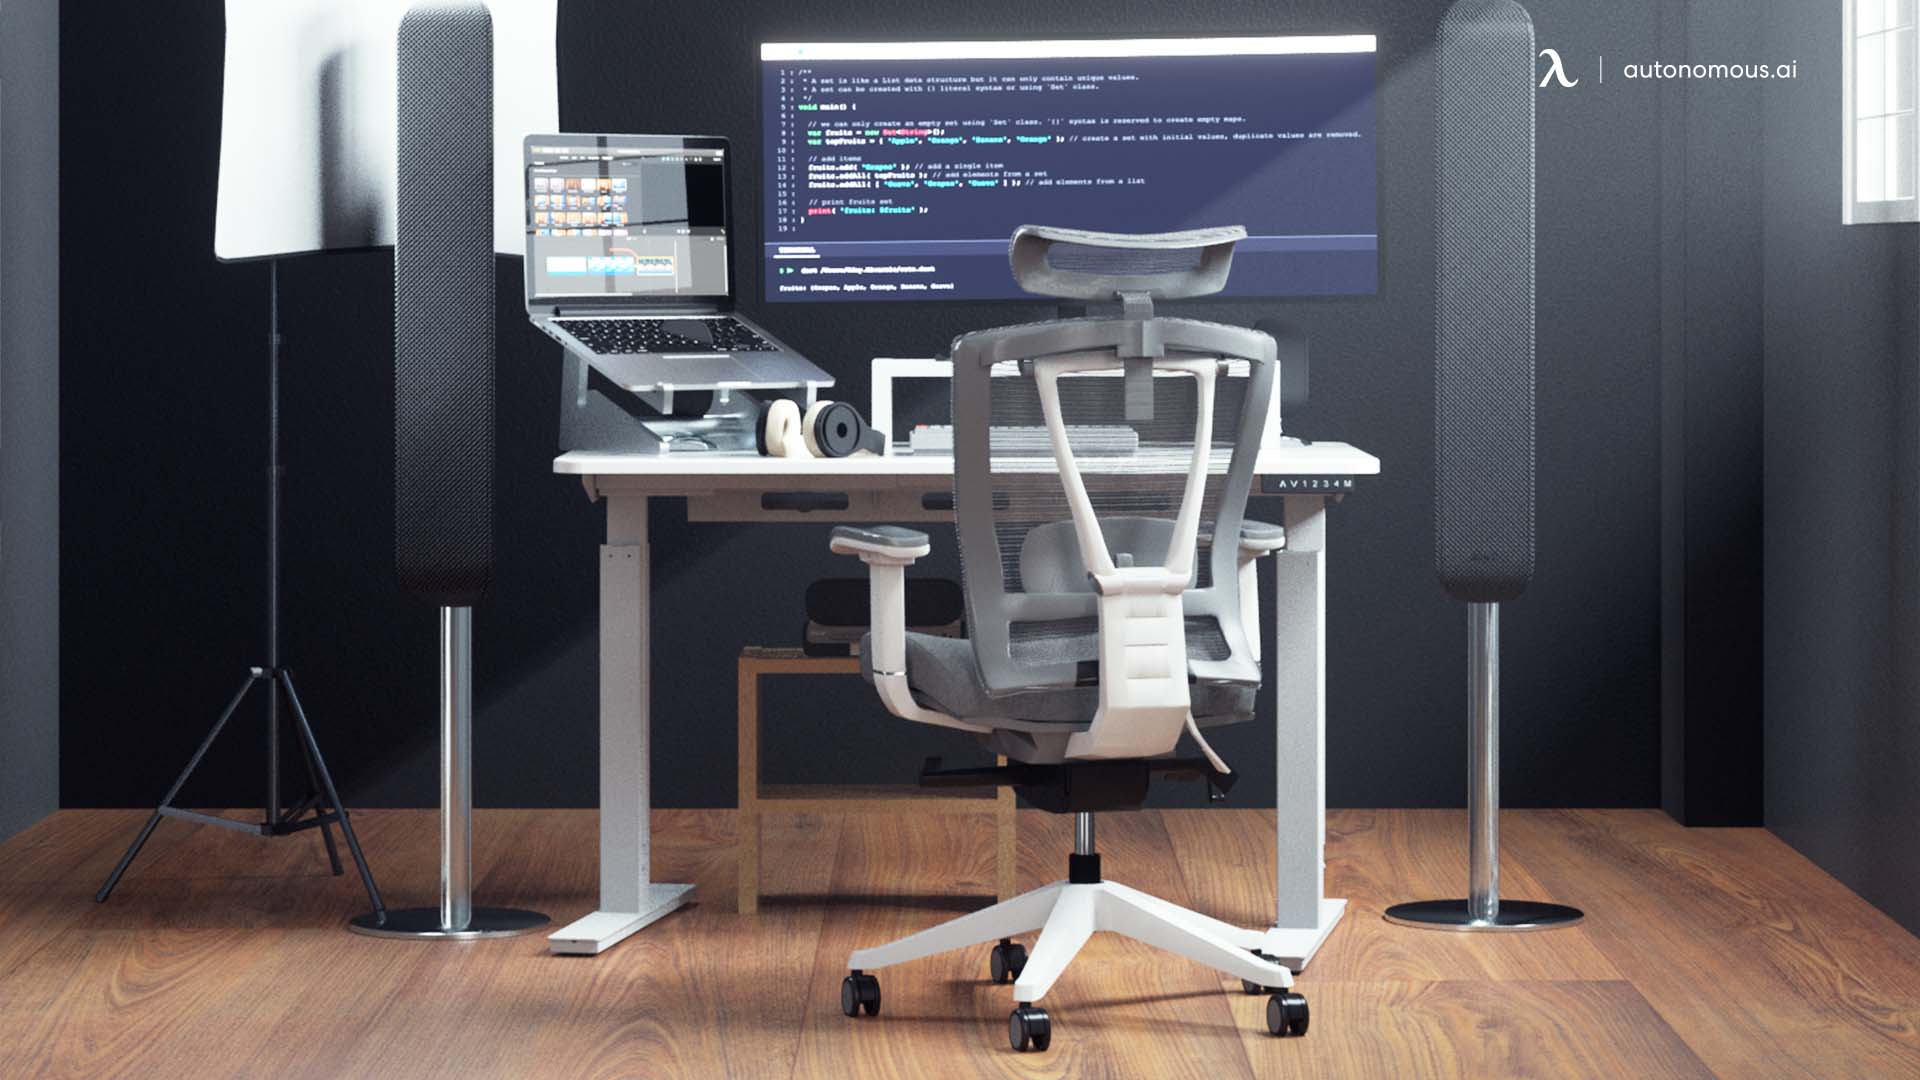 Ergonomic Chair with trading setup monitors